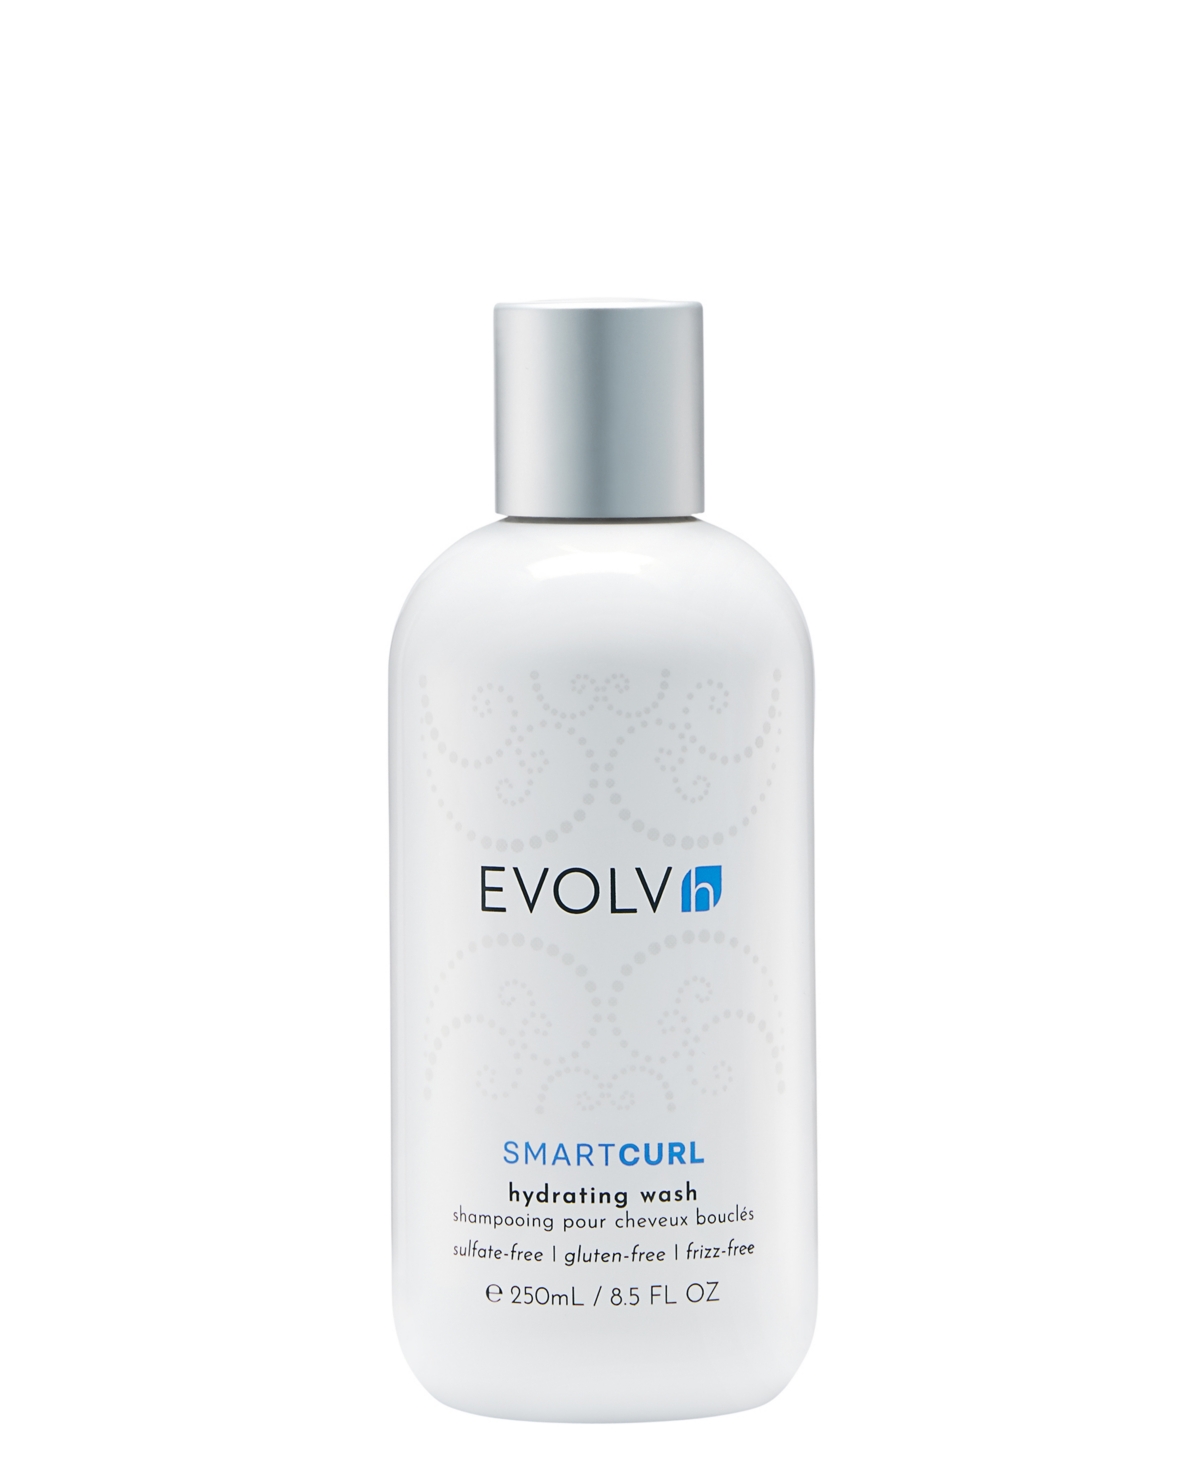 EVOLVh SmartCurl Hydrating Wash, 8.5 Oz